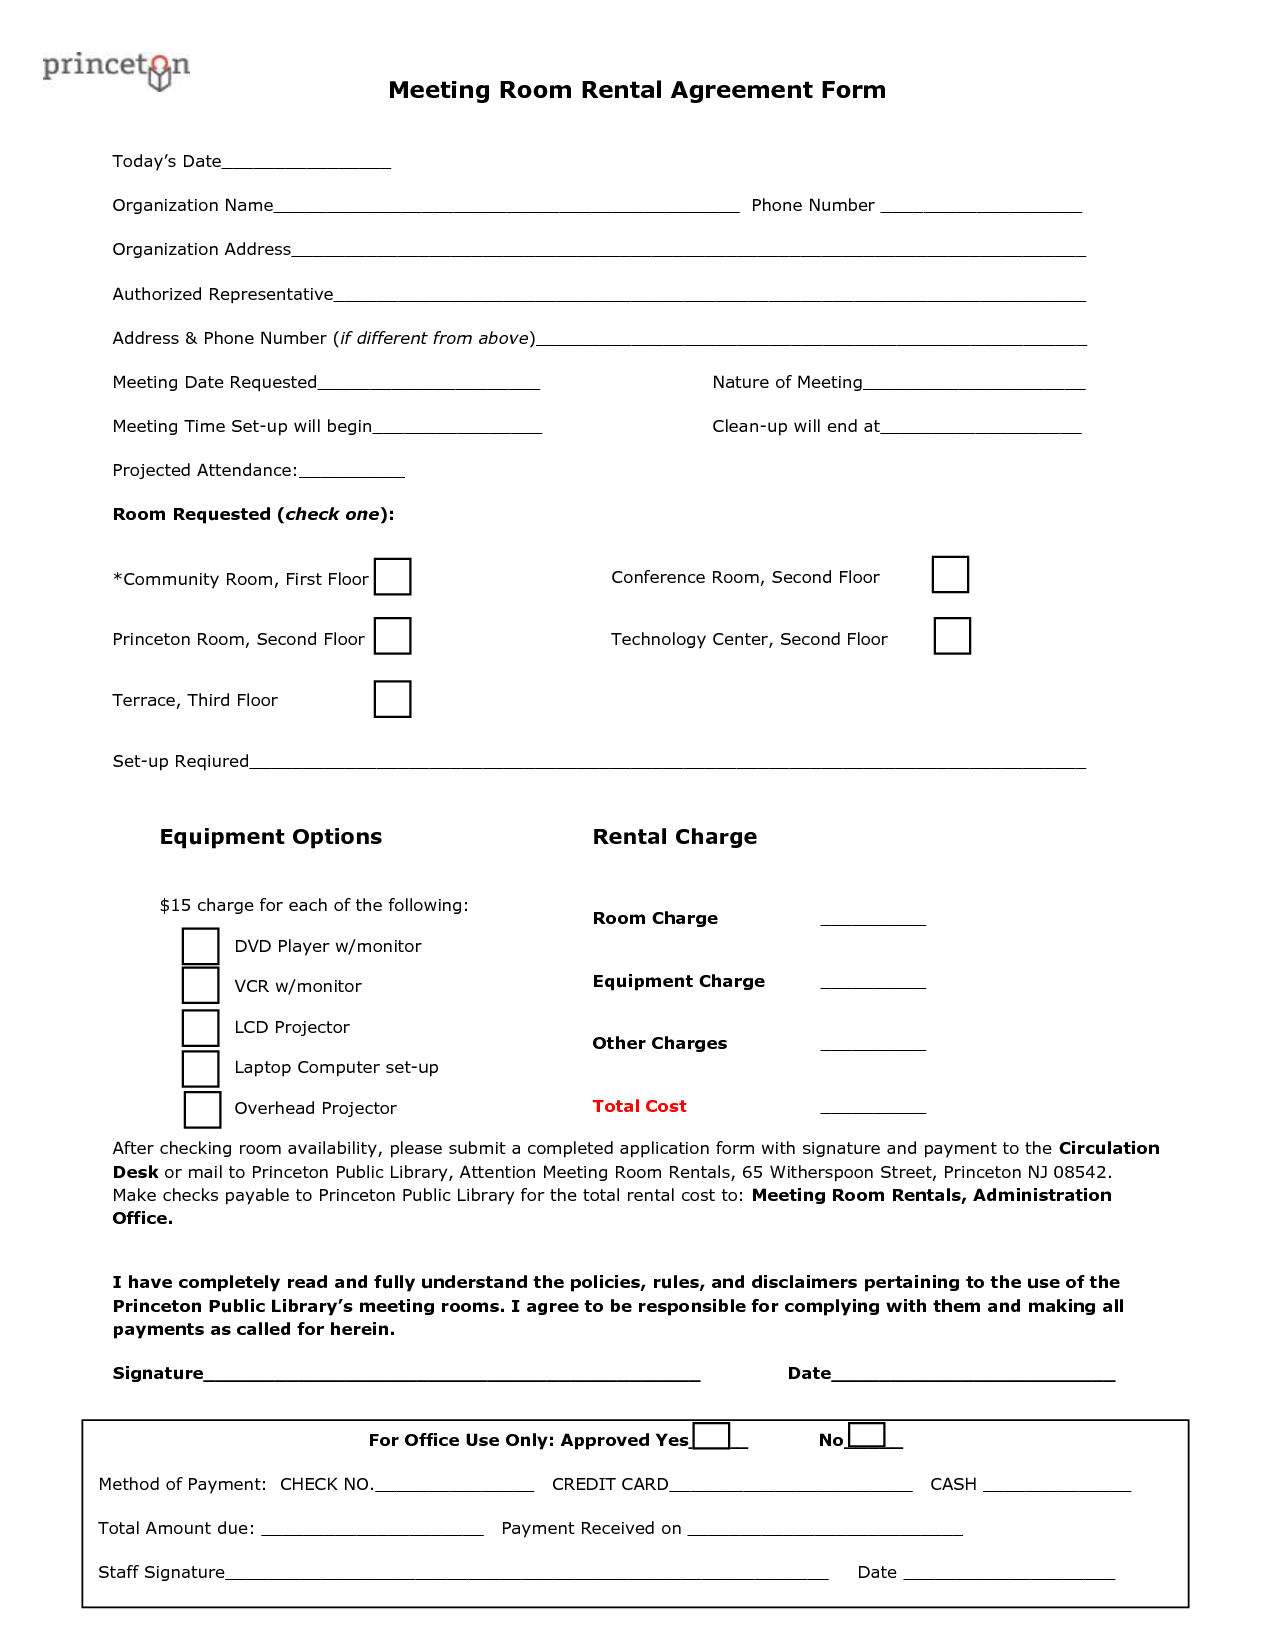 Room Rental Agreement Form Print Room Rental Agreement Form Sample